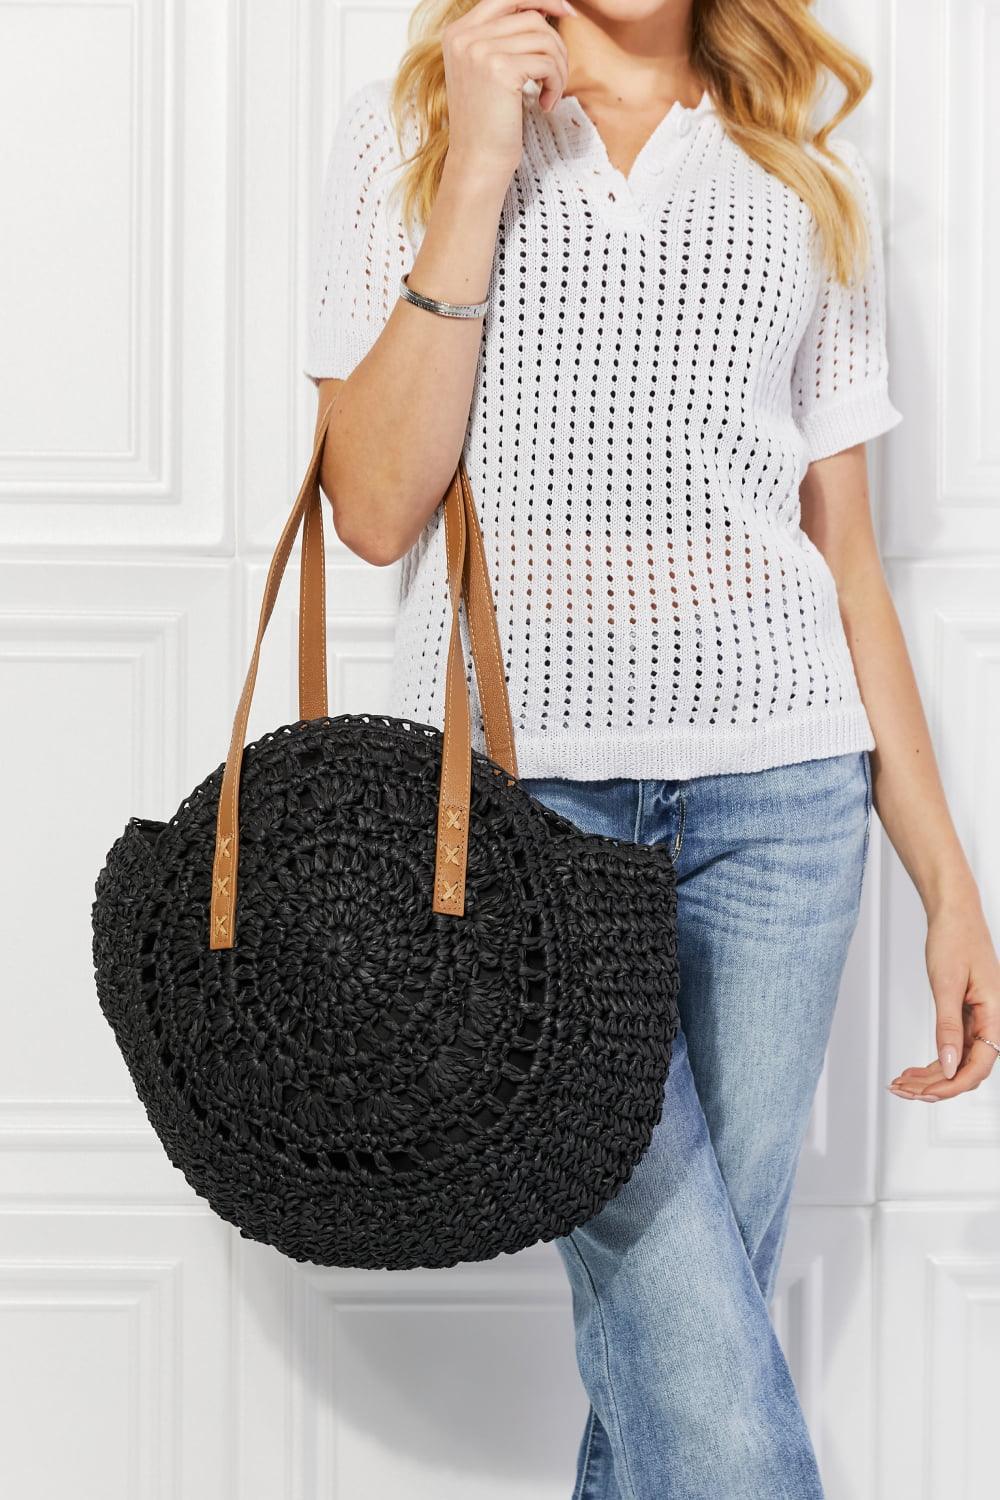 Justin Taylor Ageless Refinement Black Crochet Handbag - MXSTUDIO.COM